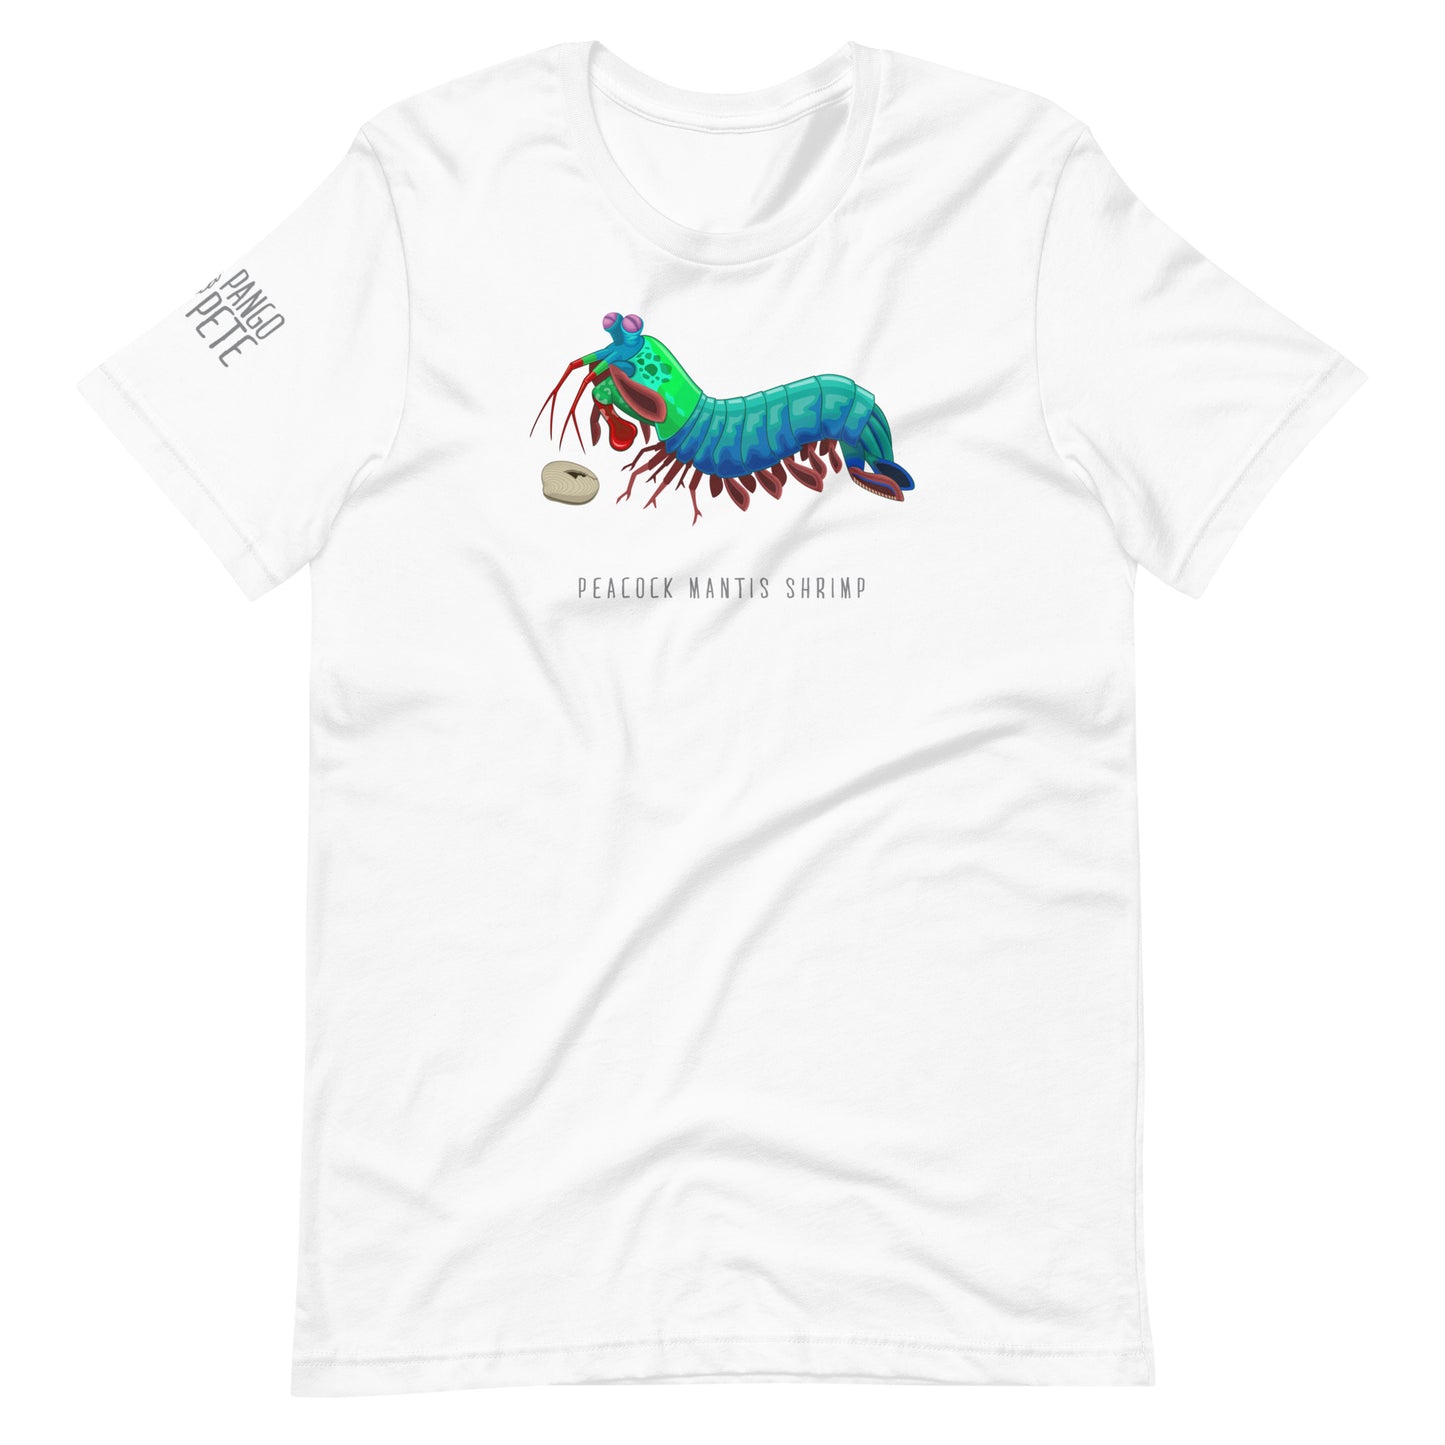 Peacock Mantis Shrimp T-shirt